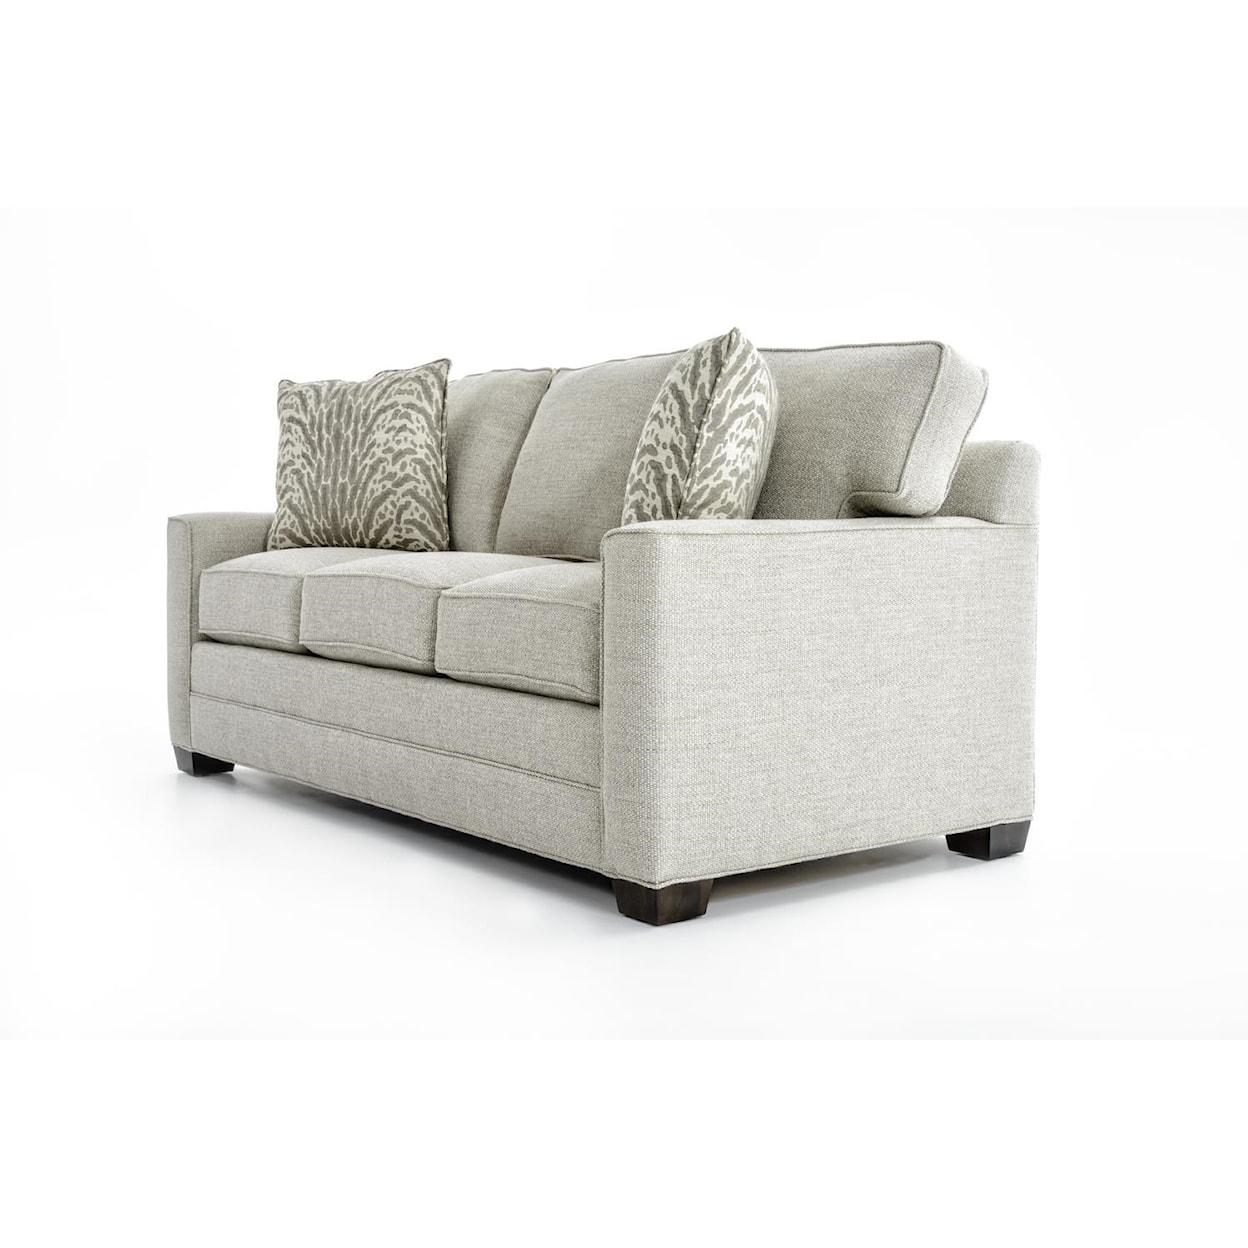 Huntington House Solutions 2053 Customizable Sofa Sleeper